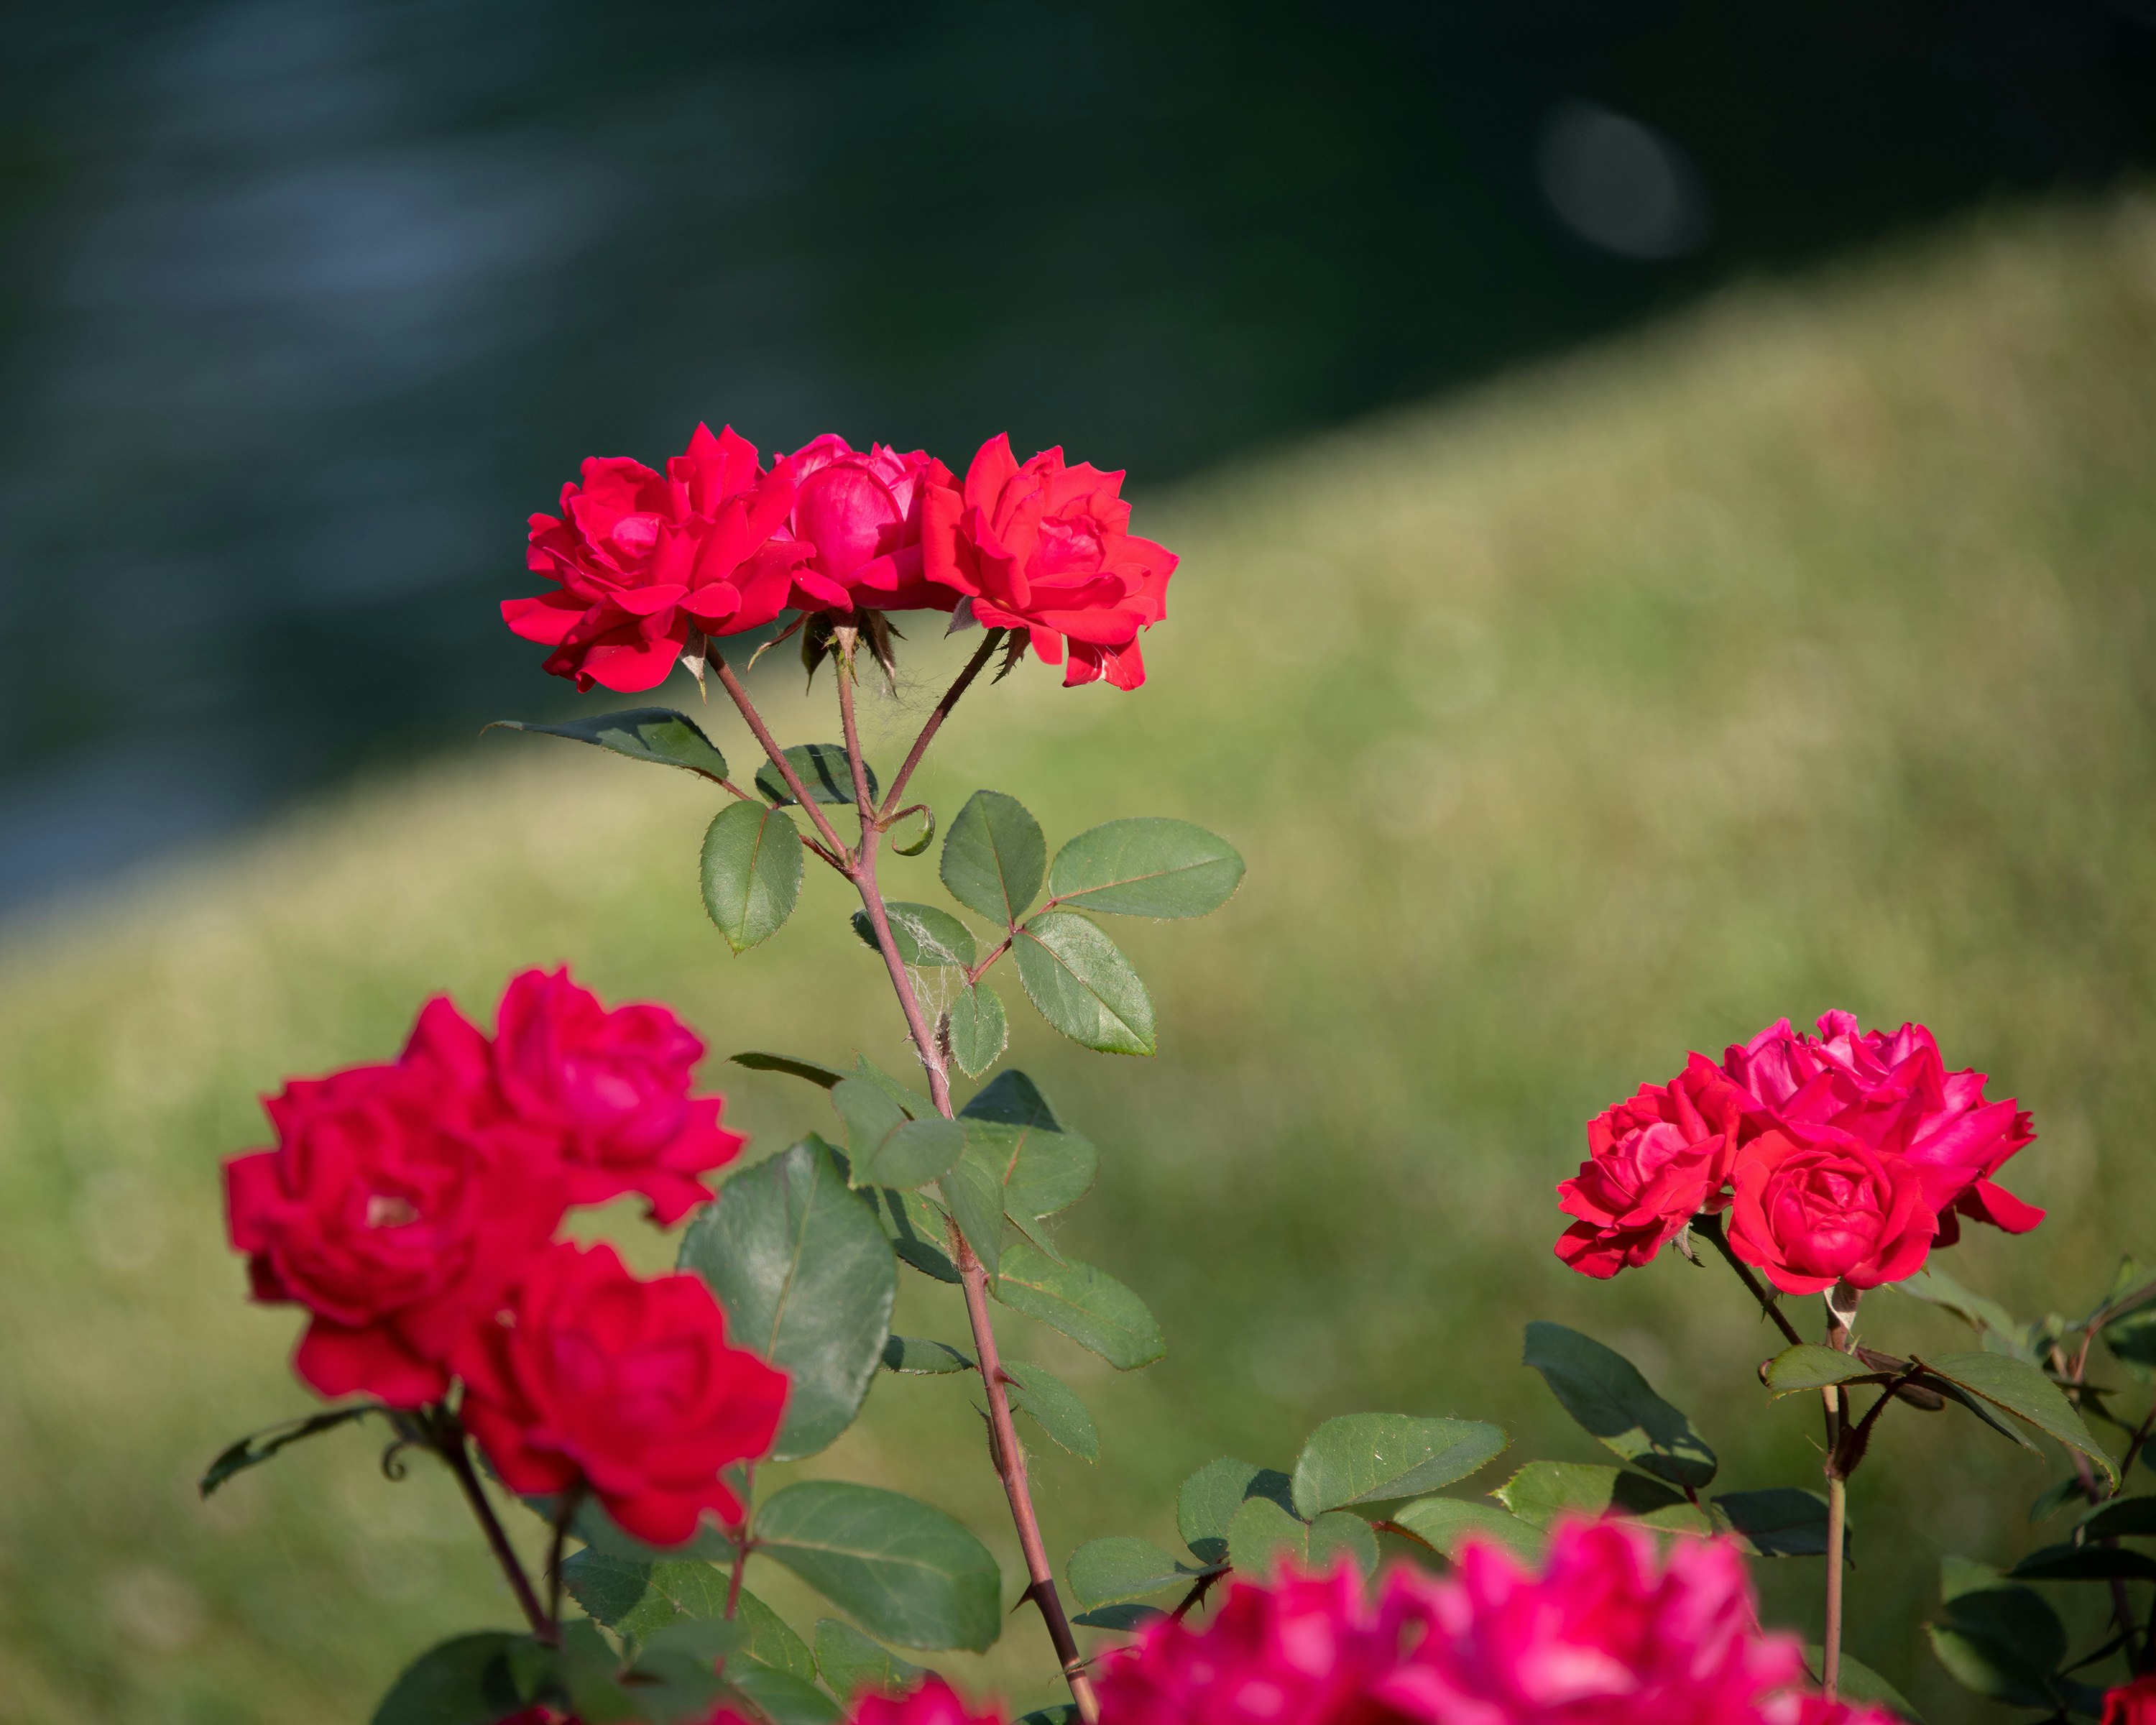 Red roses on rose bushes by Vicksburg Station Lake.